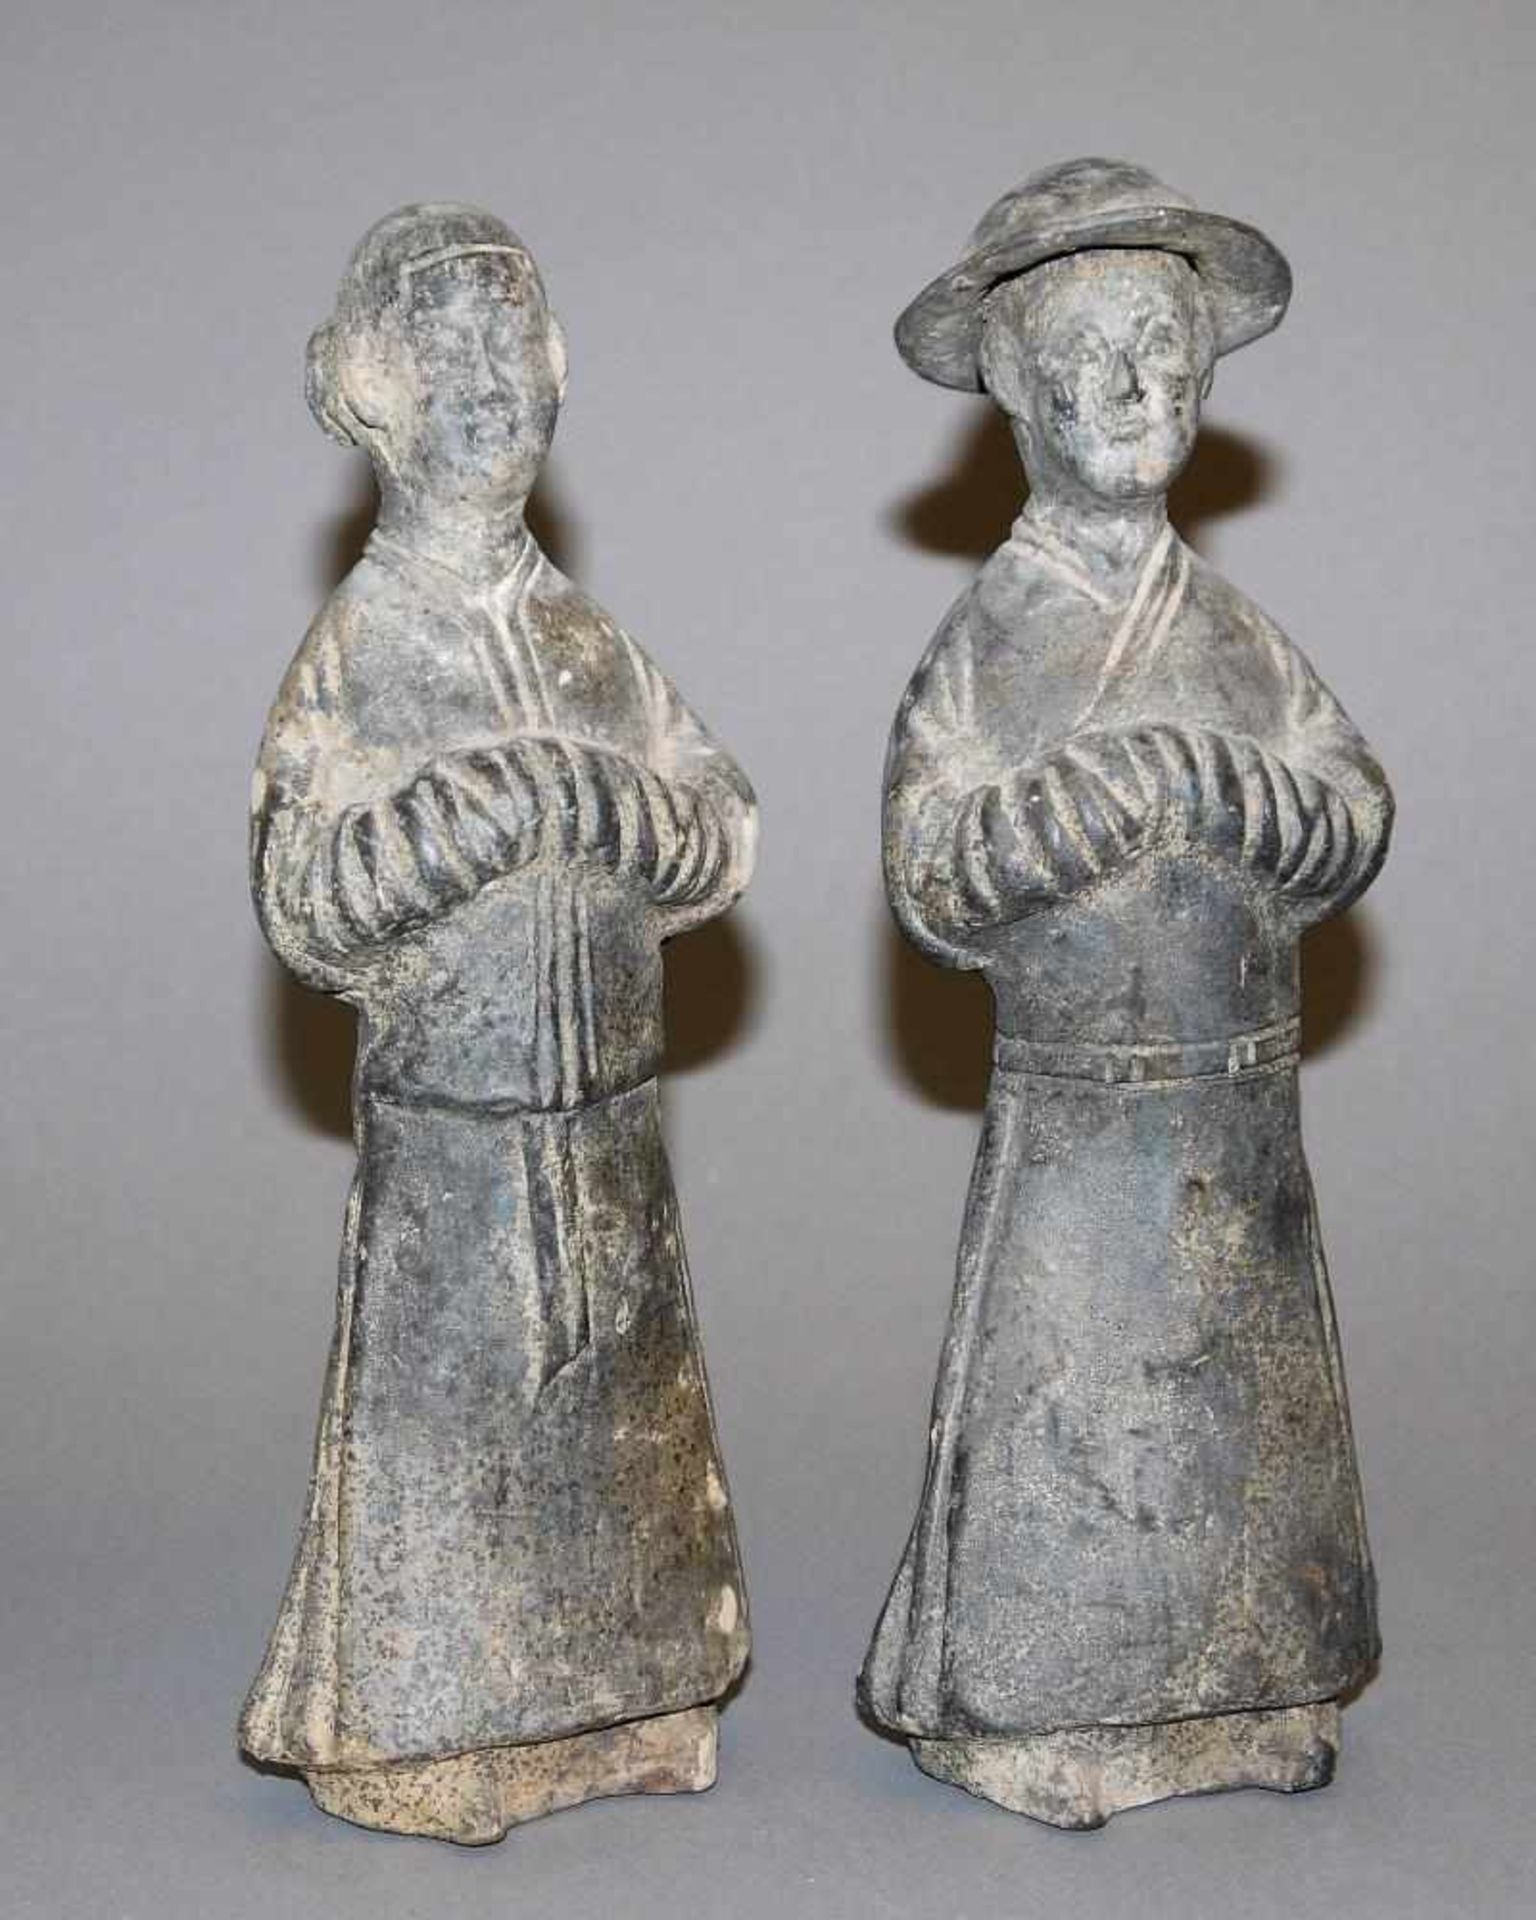 Mingqi-Figurenpaar der Yuan-Dynastie, China 13. – 14. Jh. Grabfiguren-Paar aus schwarz gebranntem